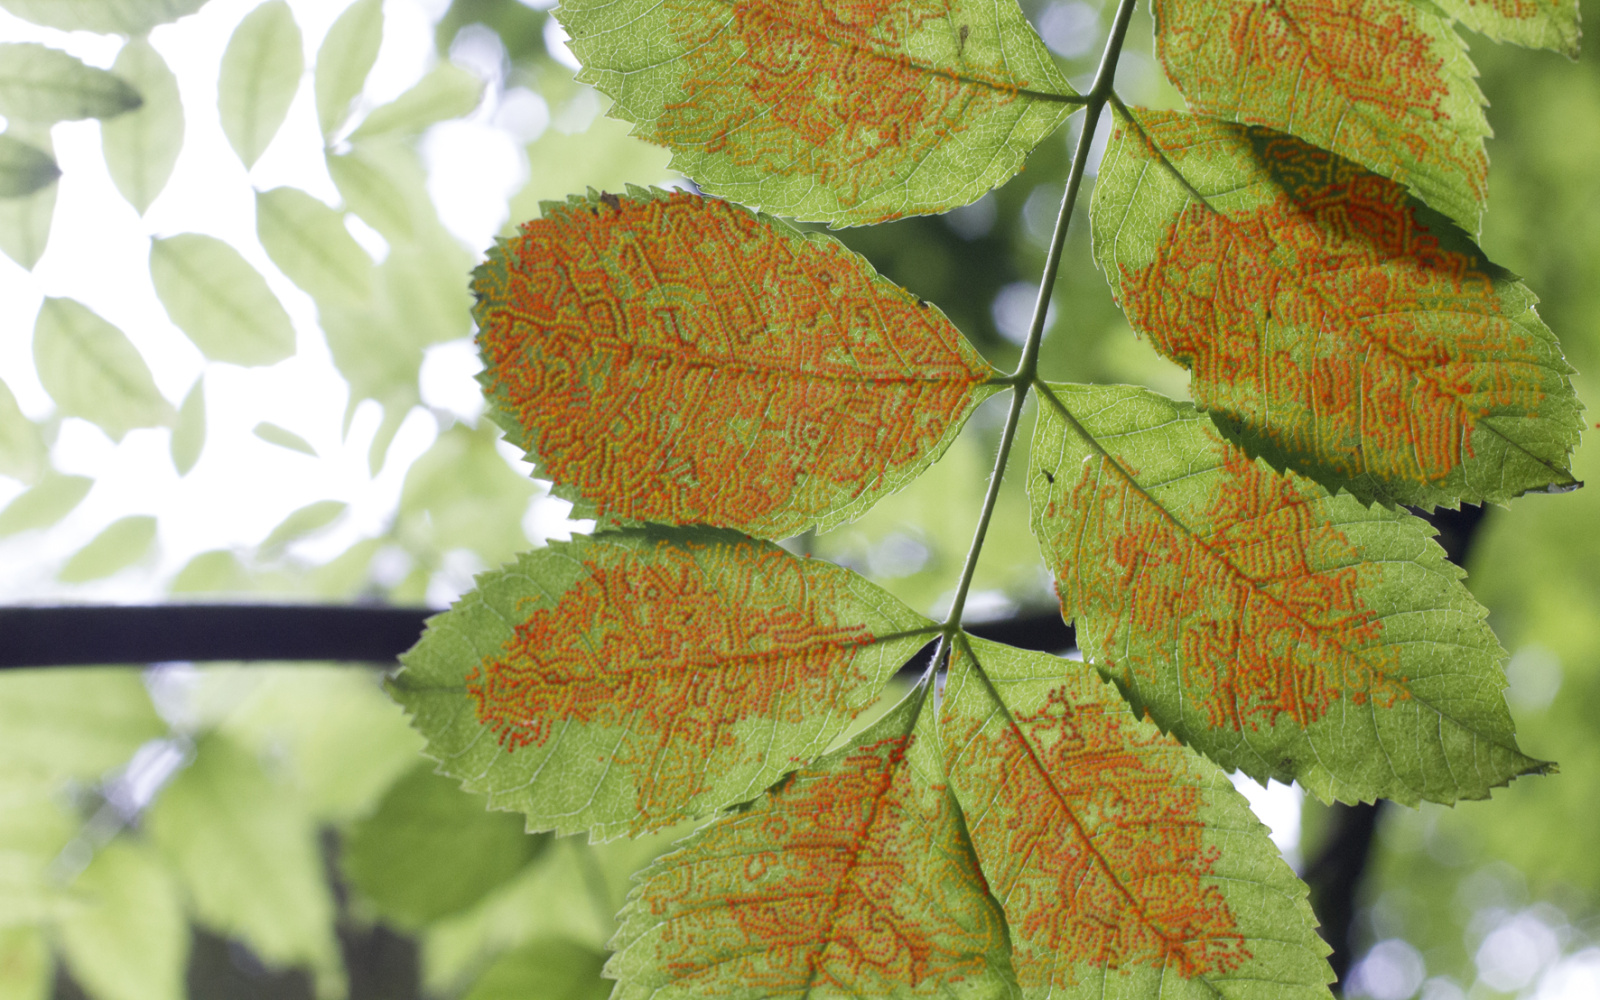 Tree leaf with pattern